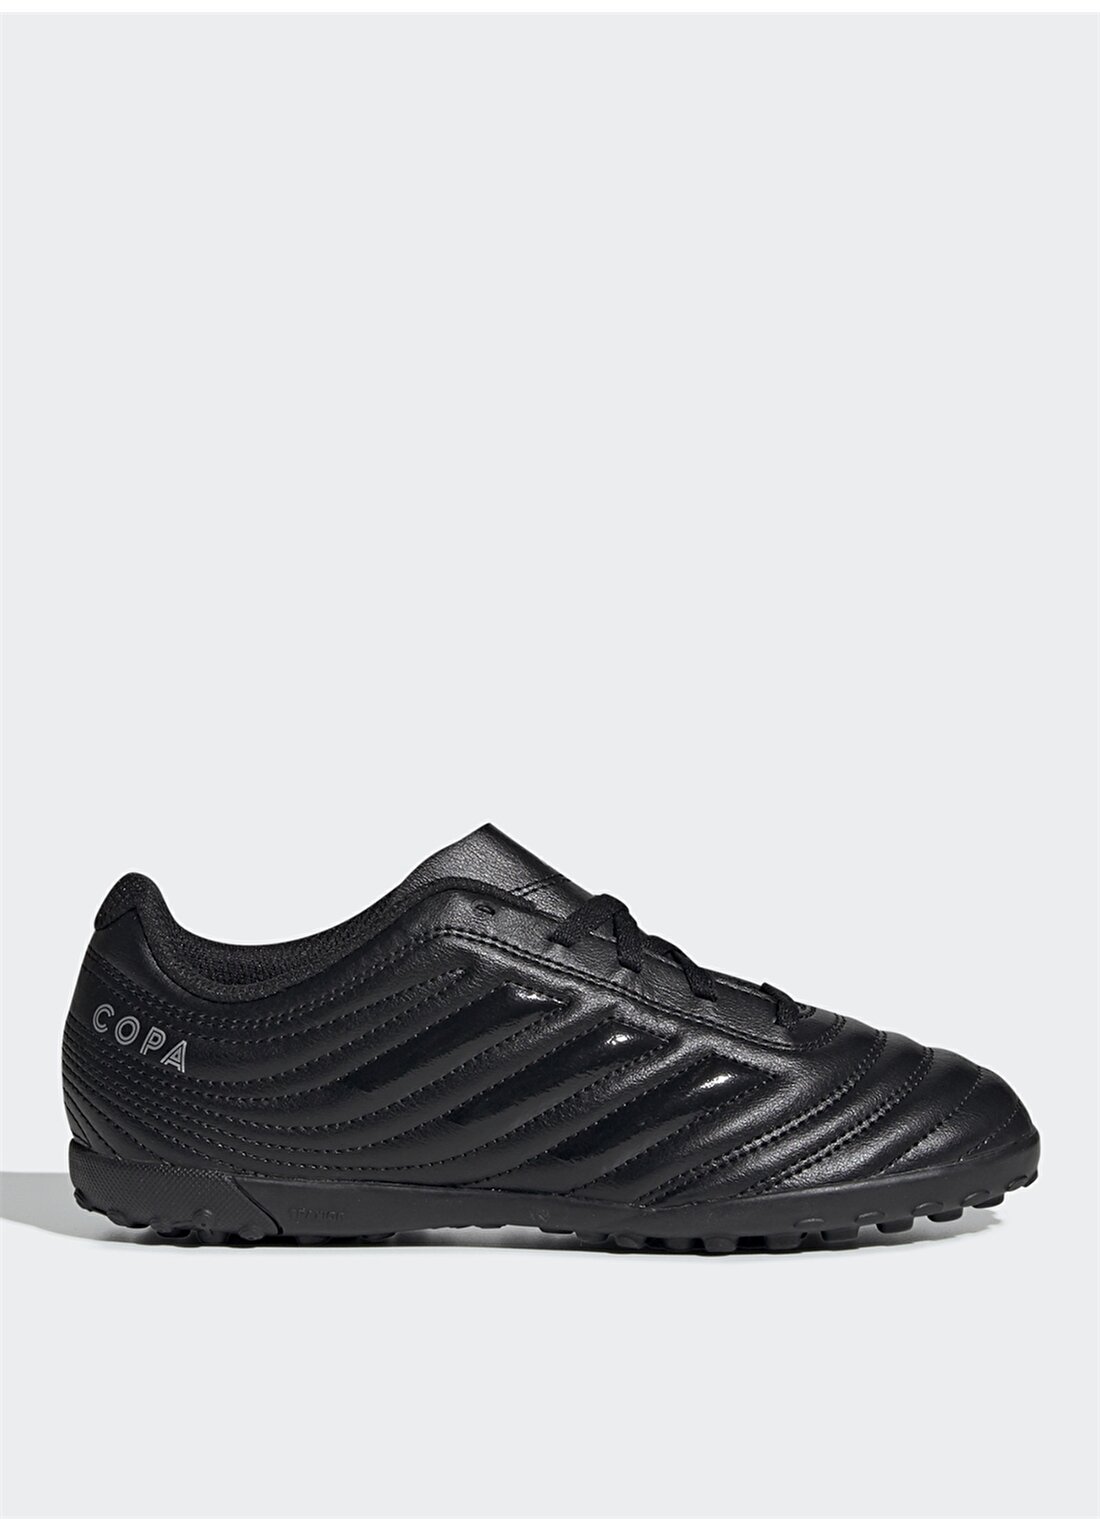 Adidas EF9031 Copa 19.4 Tf J Halı Saha Ayakkabısı